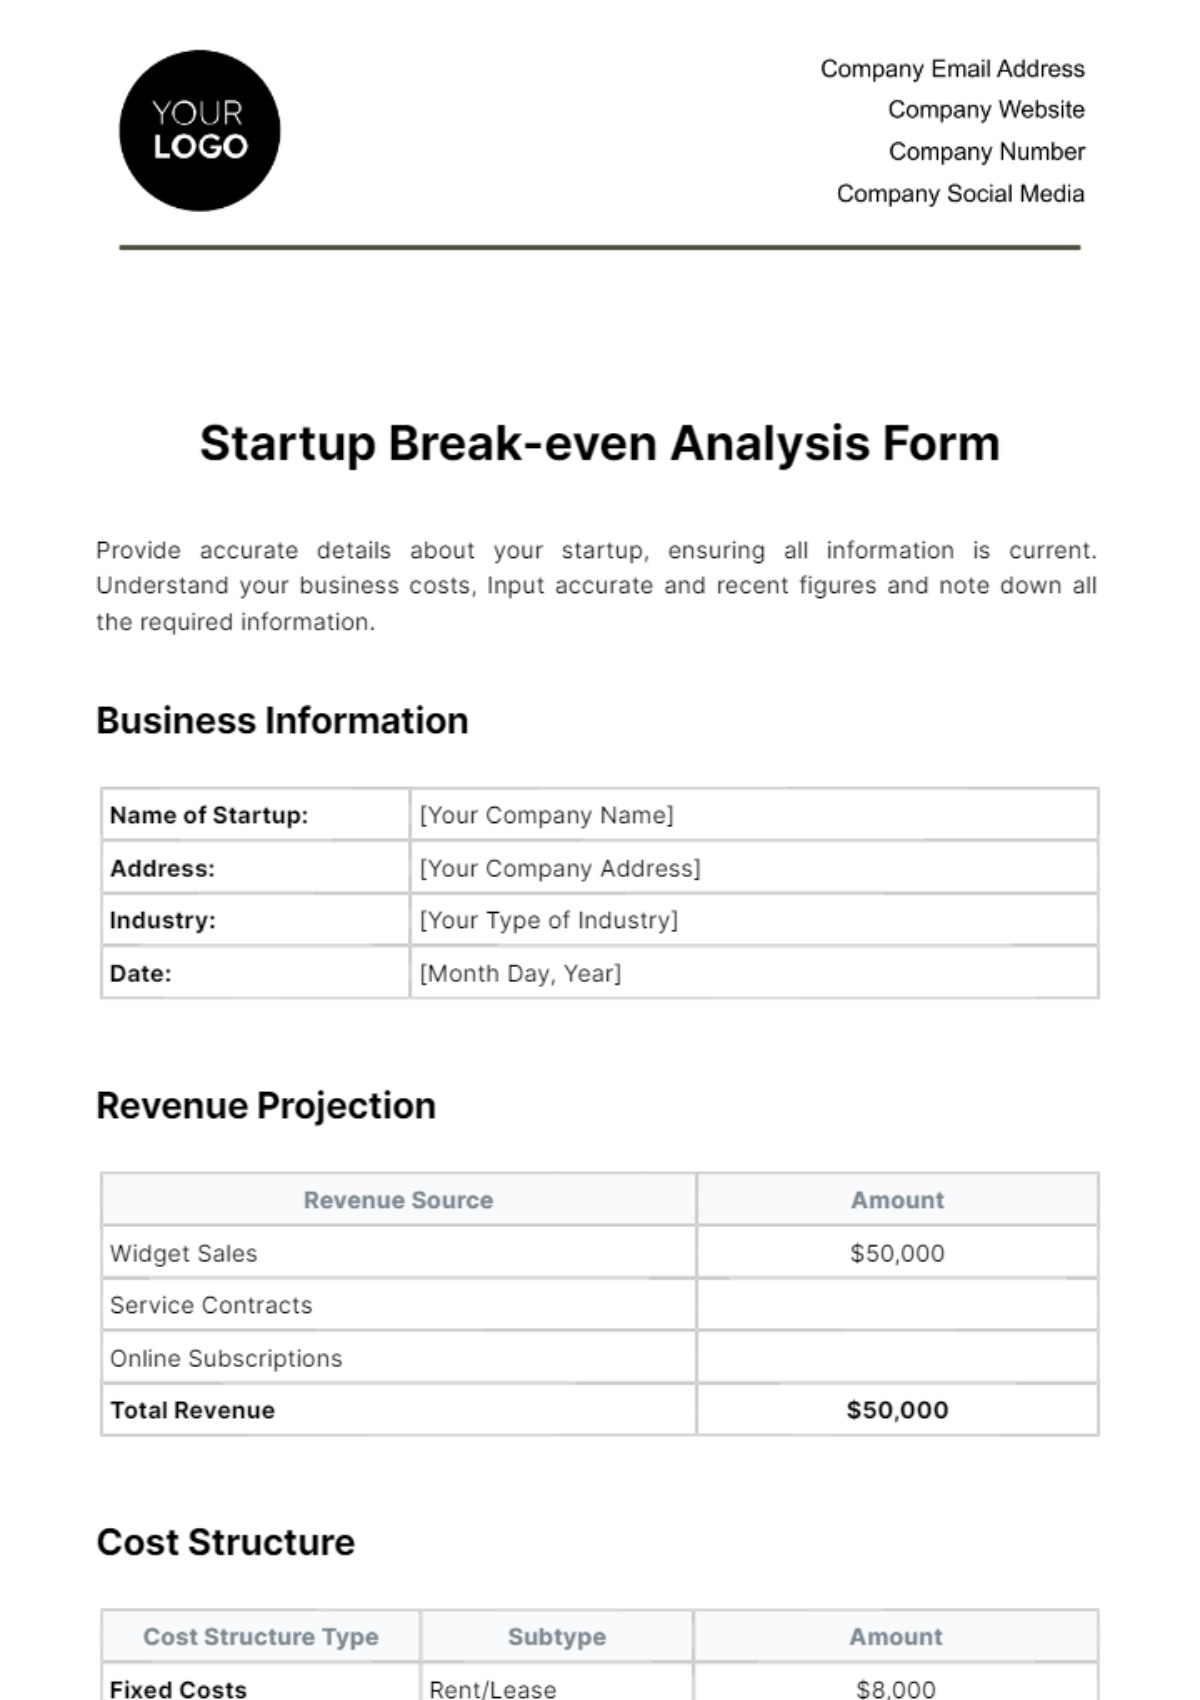 Startup Break-even Analysis Form Template